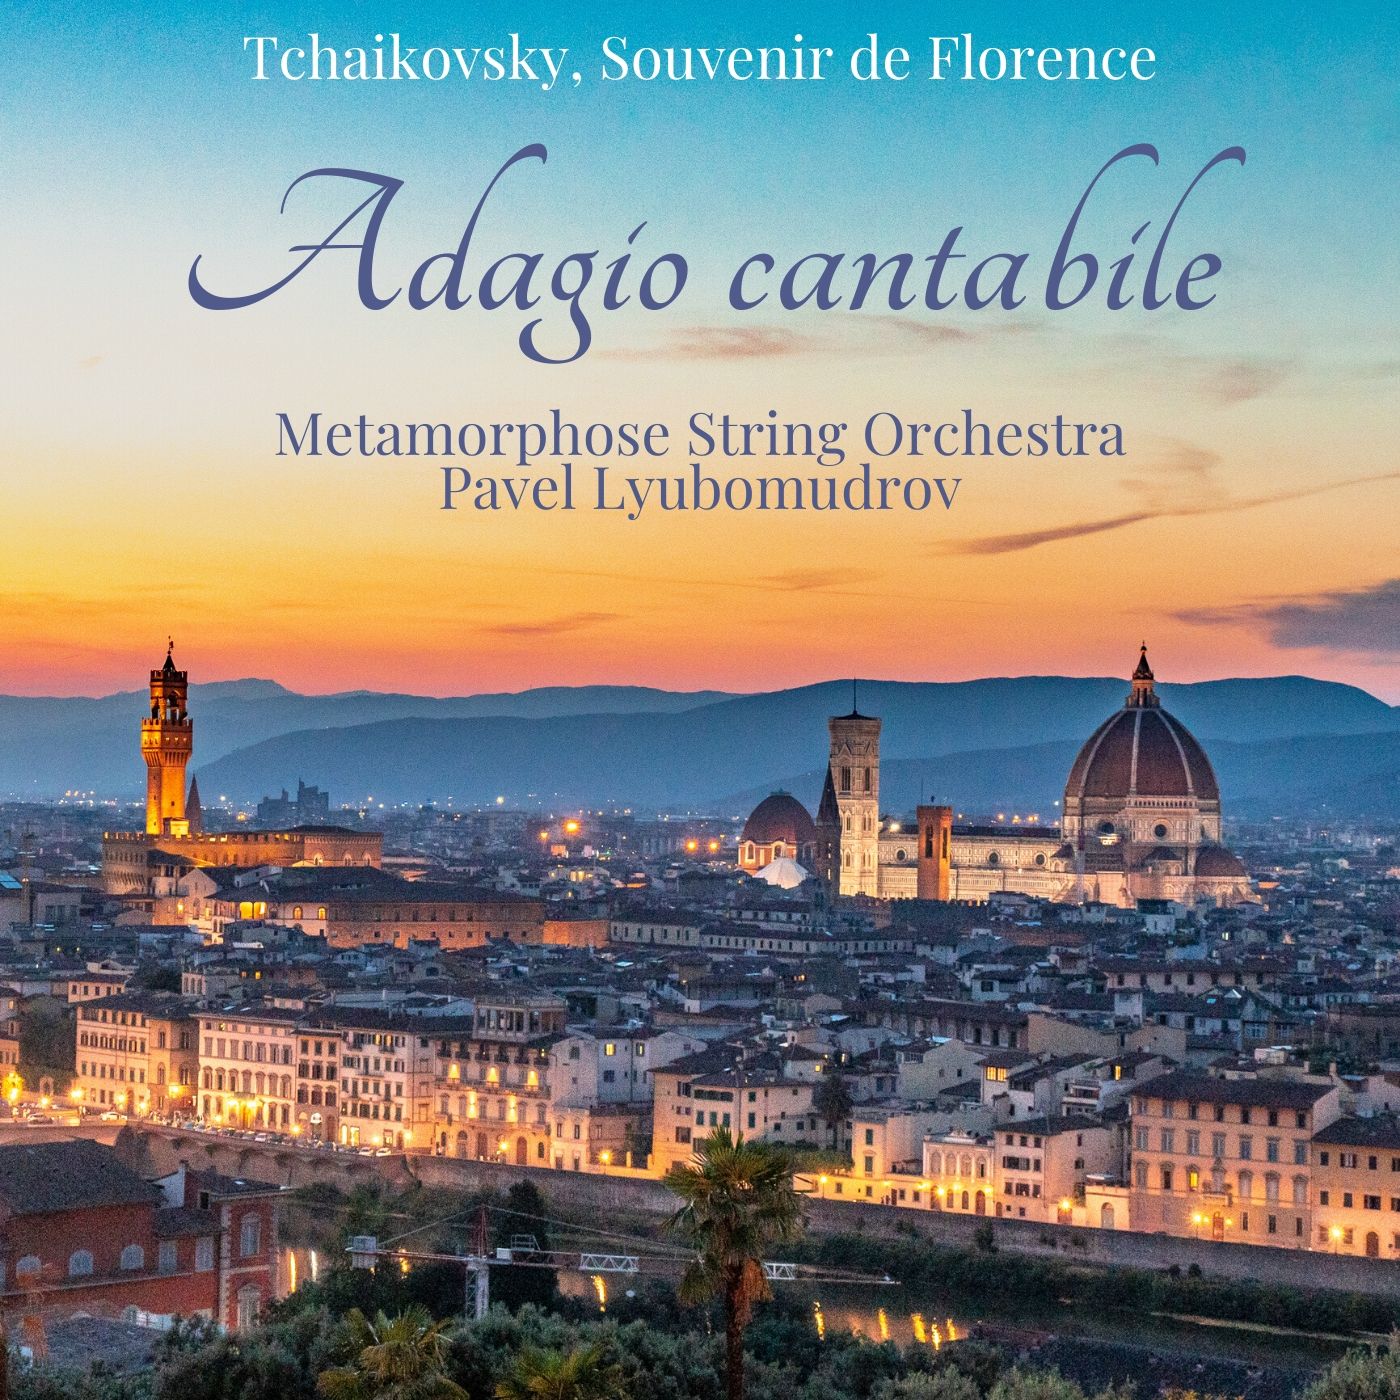 Tchaikovsky: Souvenir de Florence, Adagio Cantabile